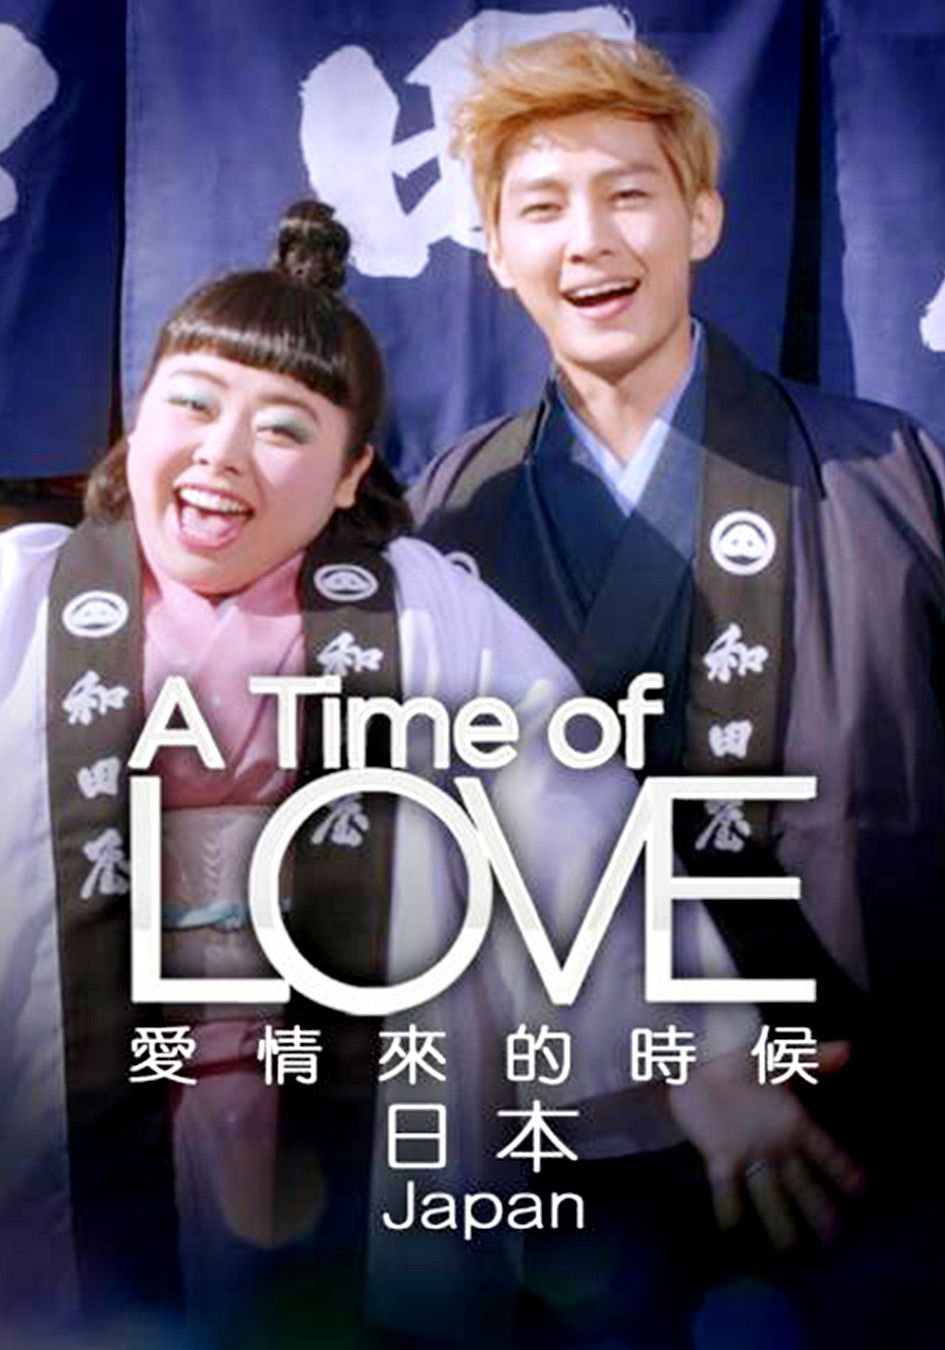 愛情來的時候 日本篇-A Time Of Love - Japan